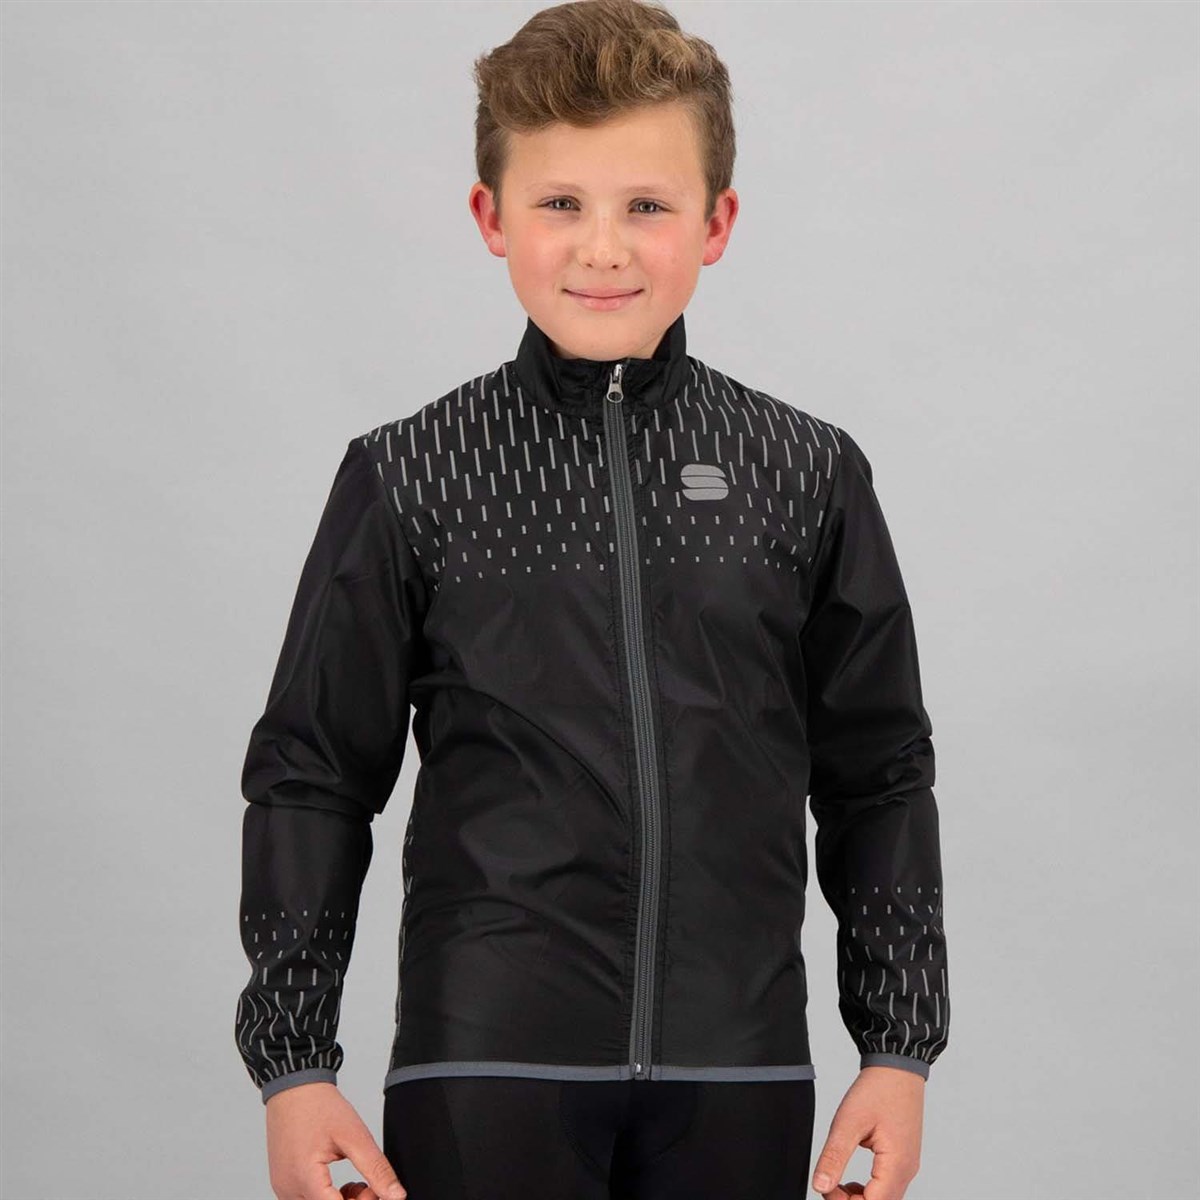 Sportful Reflex Kids Long Sleeve Cycling Jacket product image